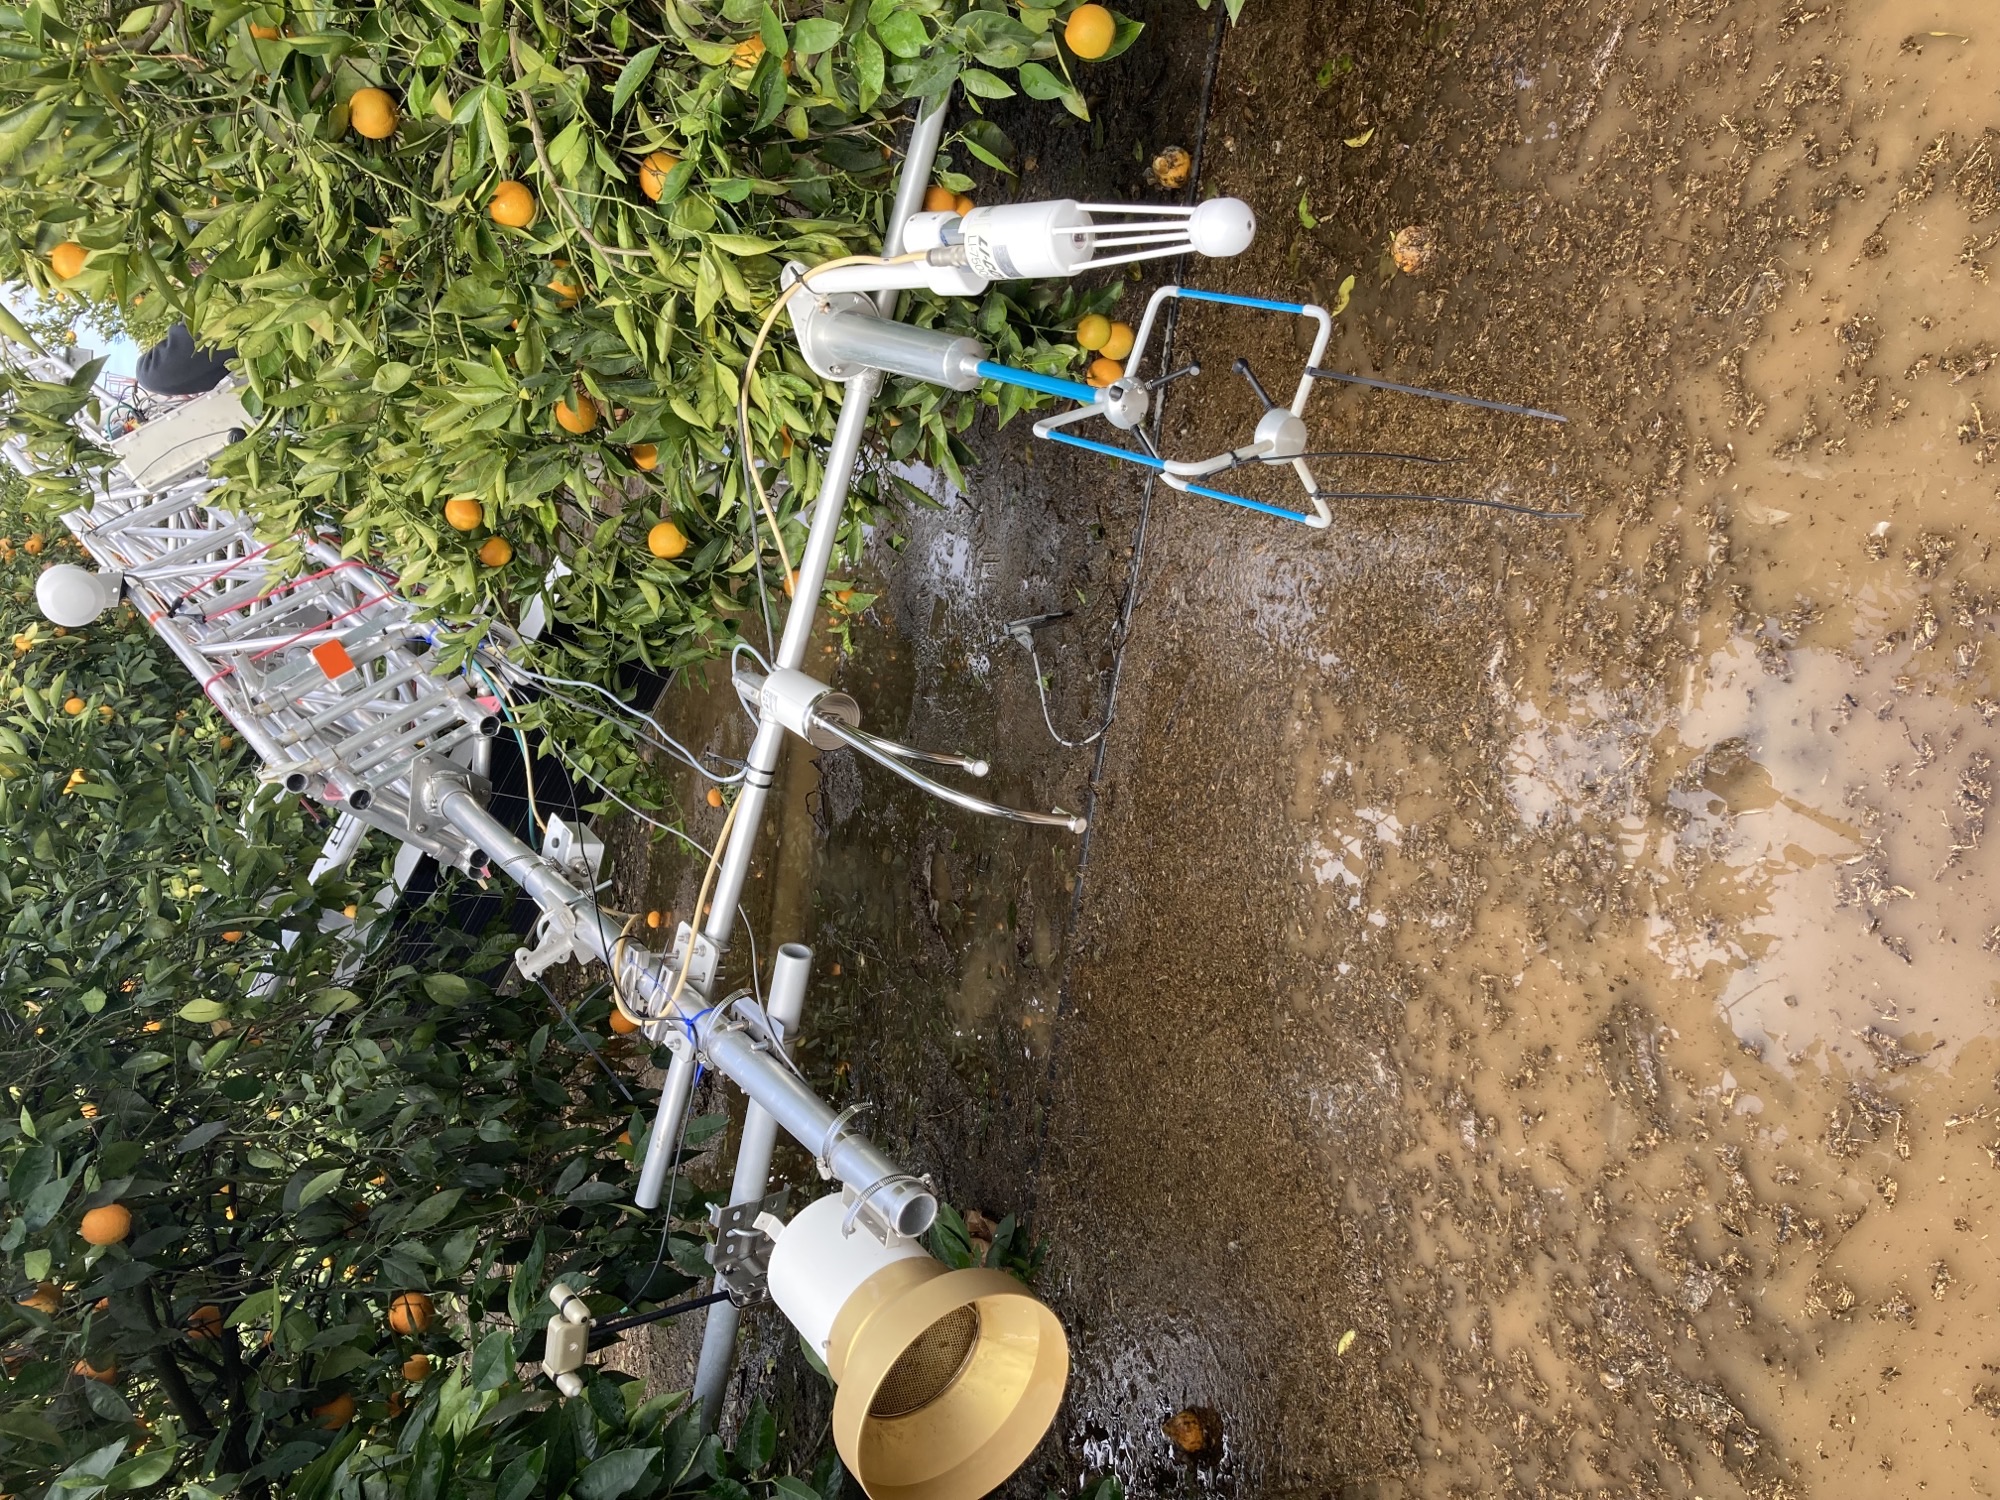 LI-COR LI-710 Evapotranspiration Sensor on a flux tower in a citrus farm